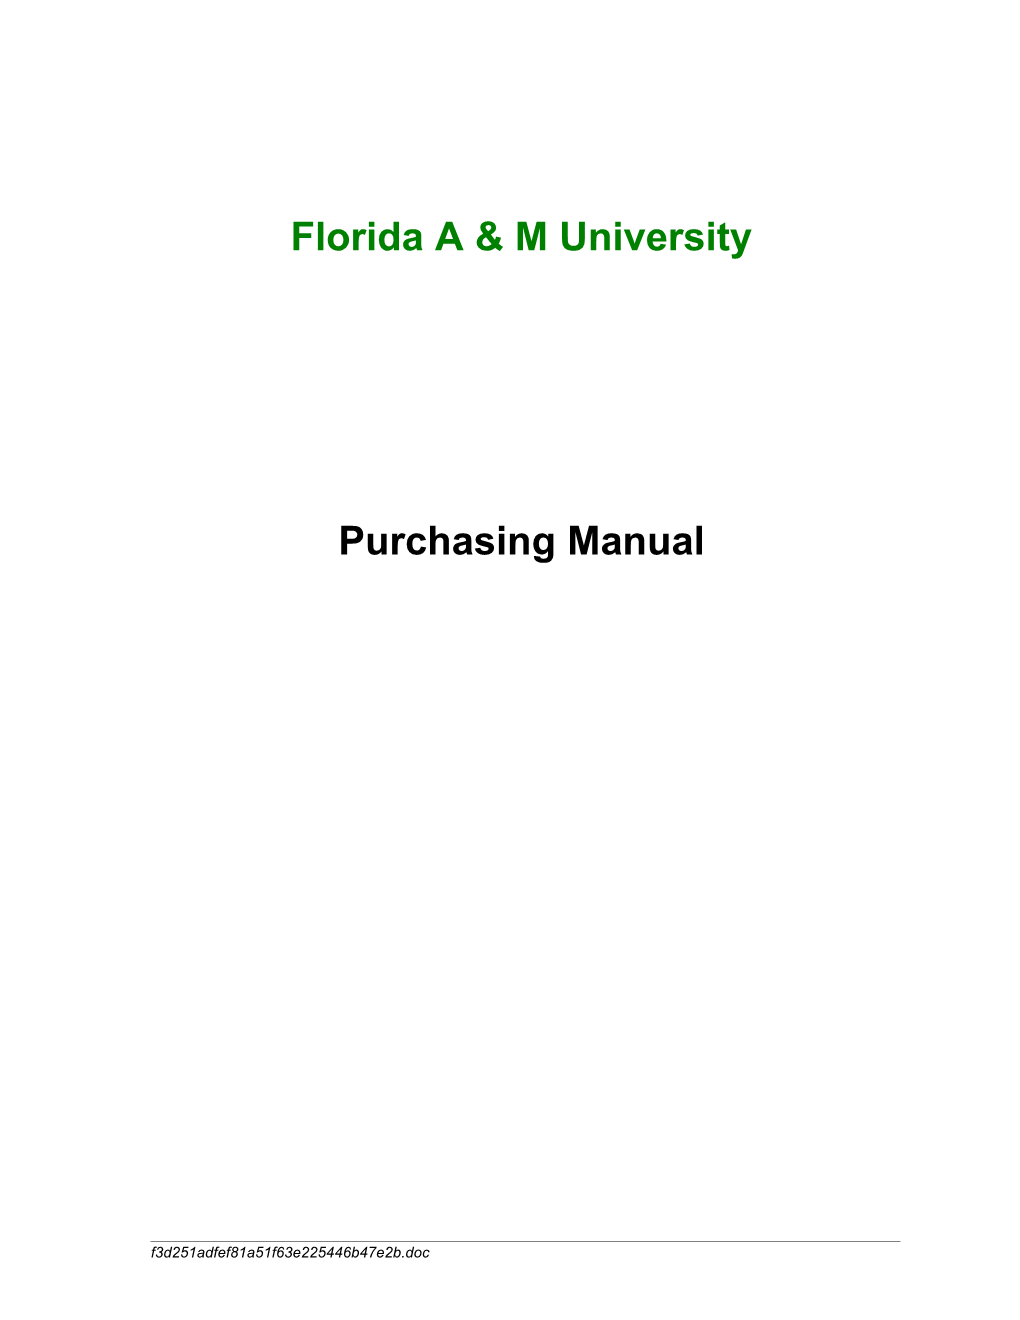 Purchasing Manual Effective Nov 15 2007